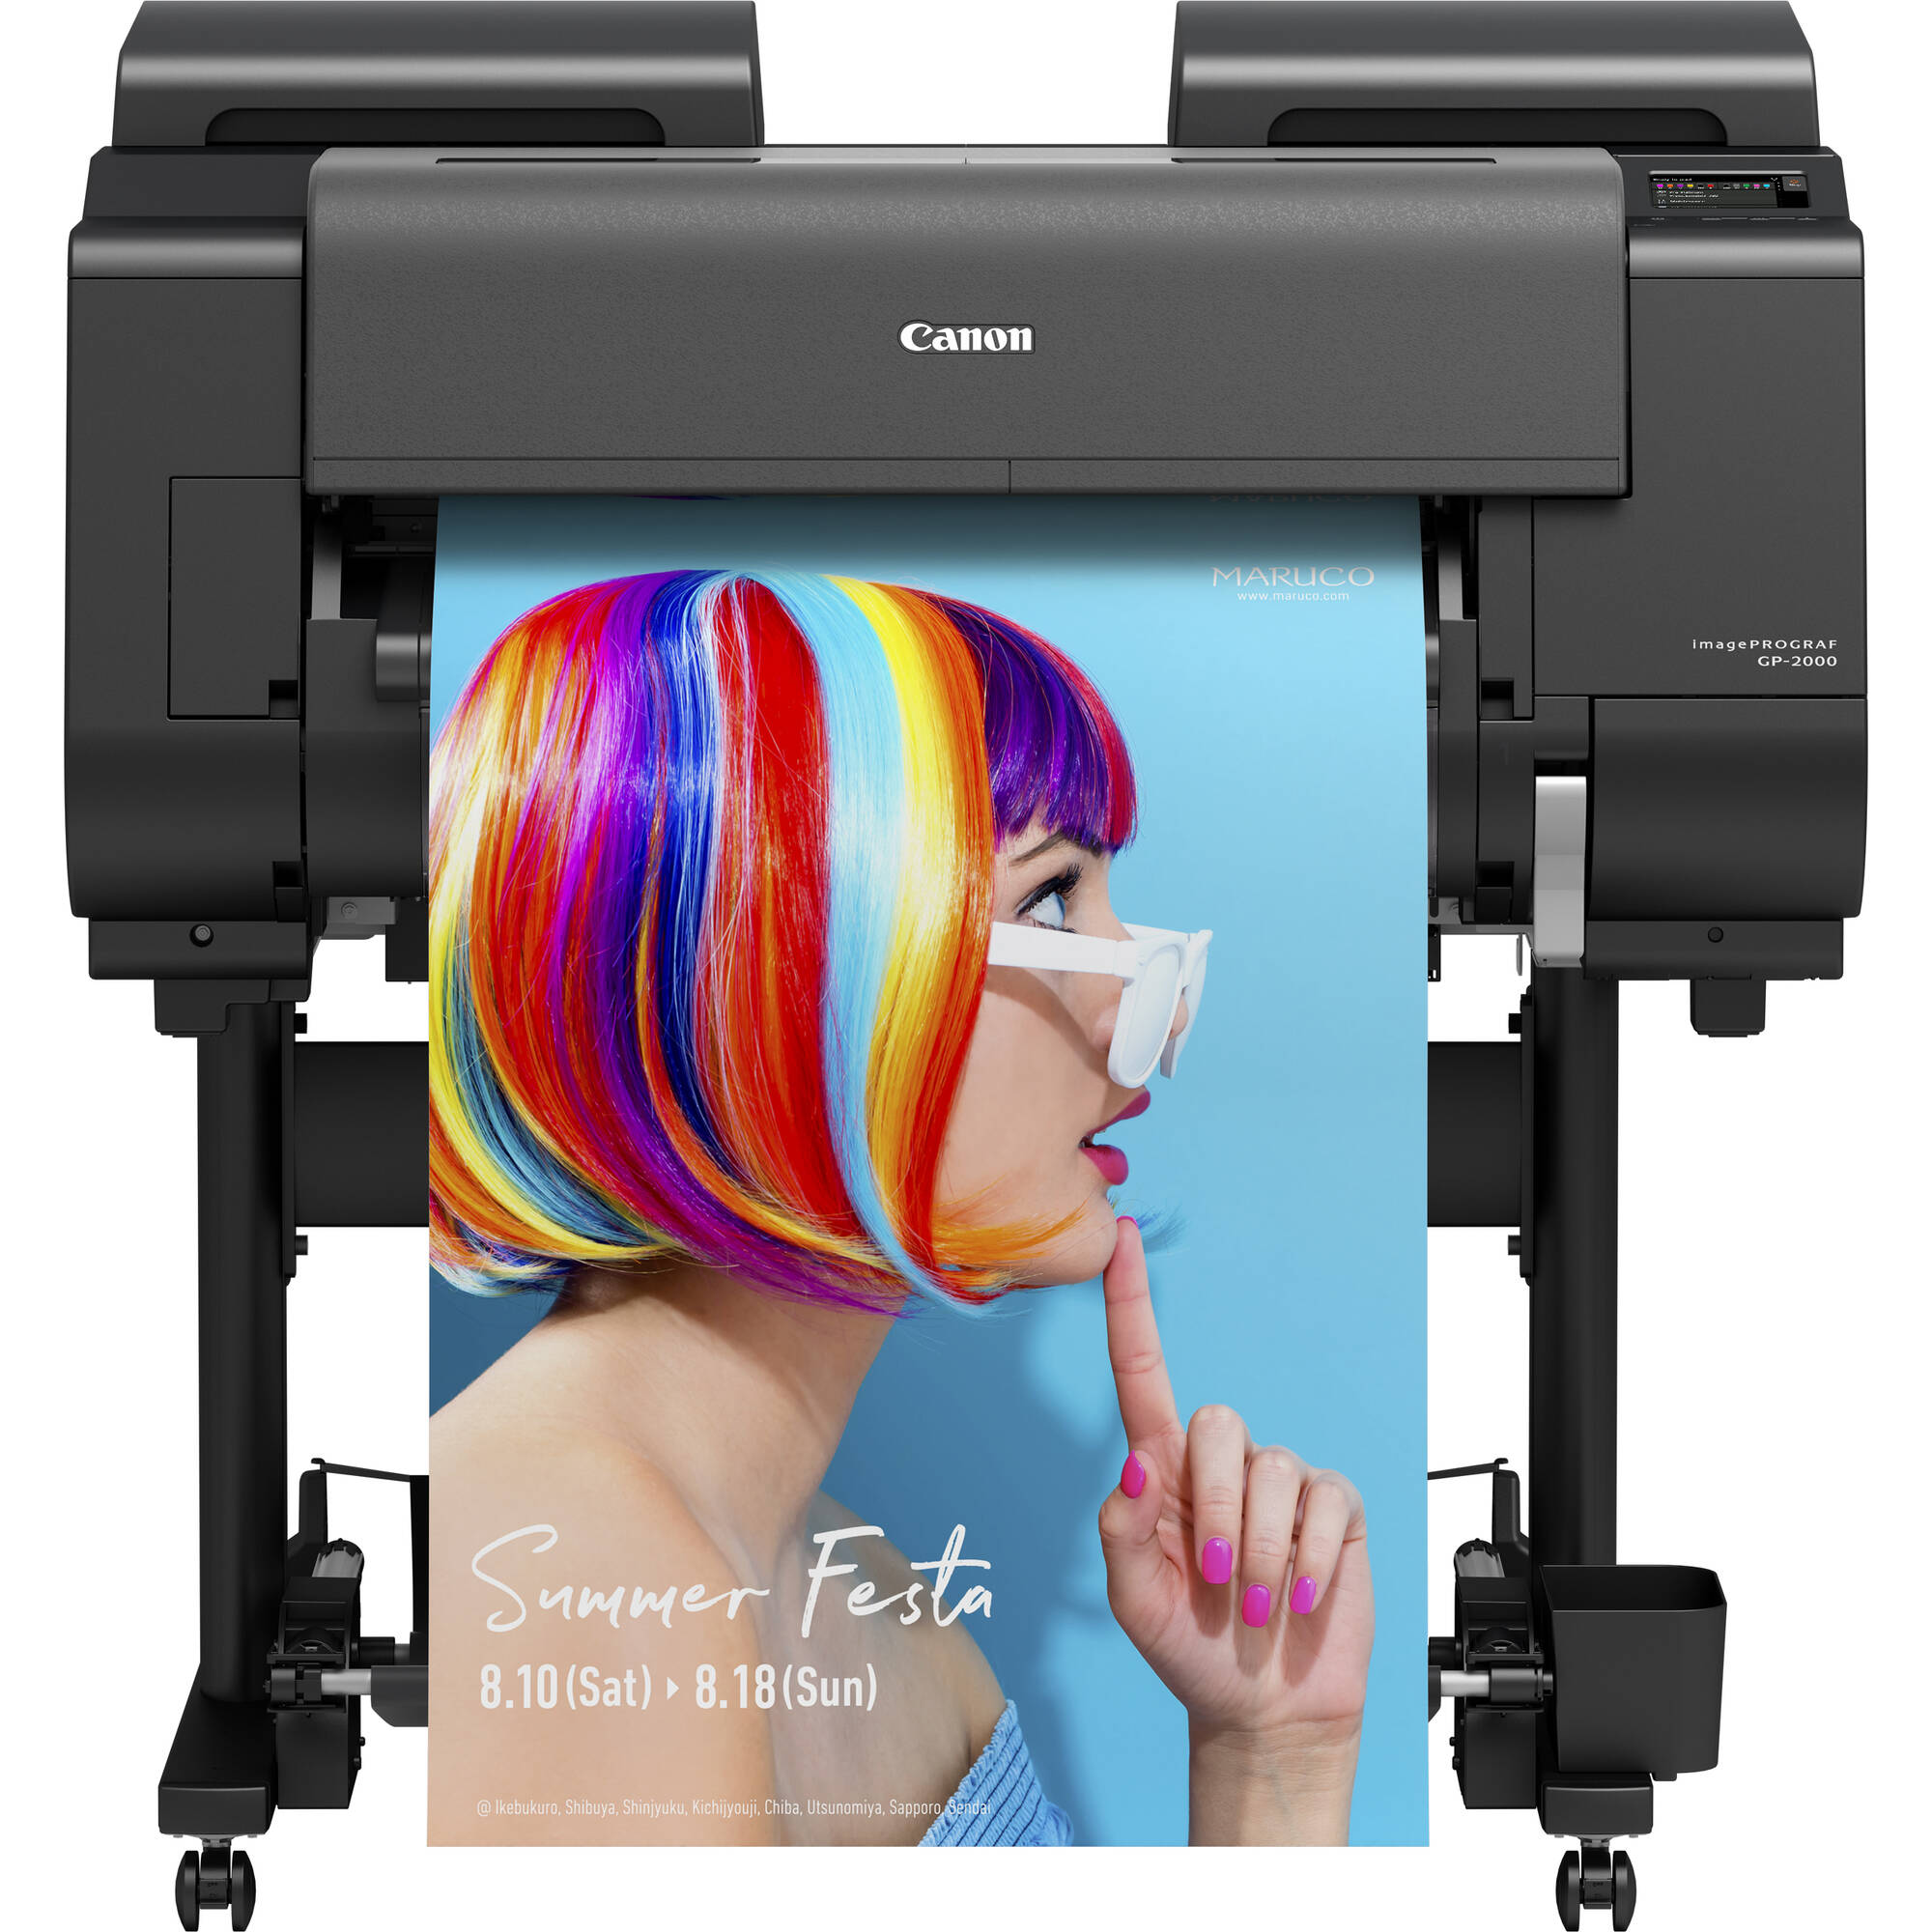 Absolute Toner $192/Month Canon imagePROGRAF GP-2000 24" Large Format Inkjet Printer - Upto 2400 x 1200 DPI Print Resolution Large Format Printers